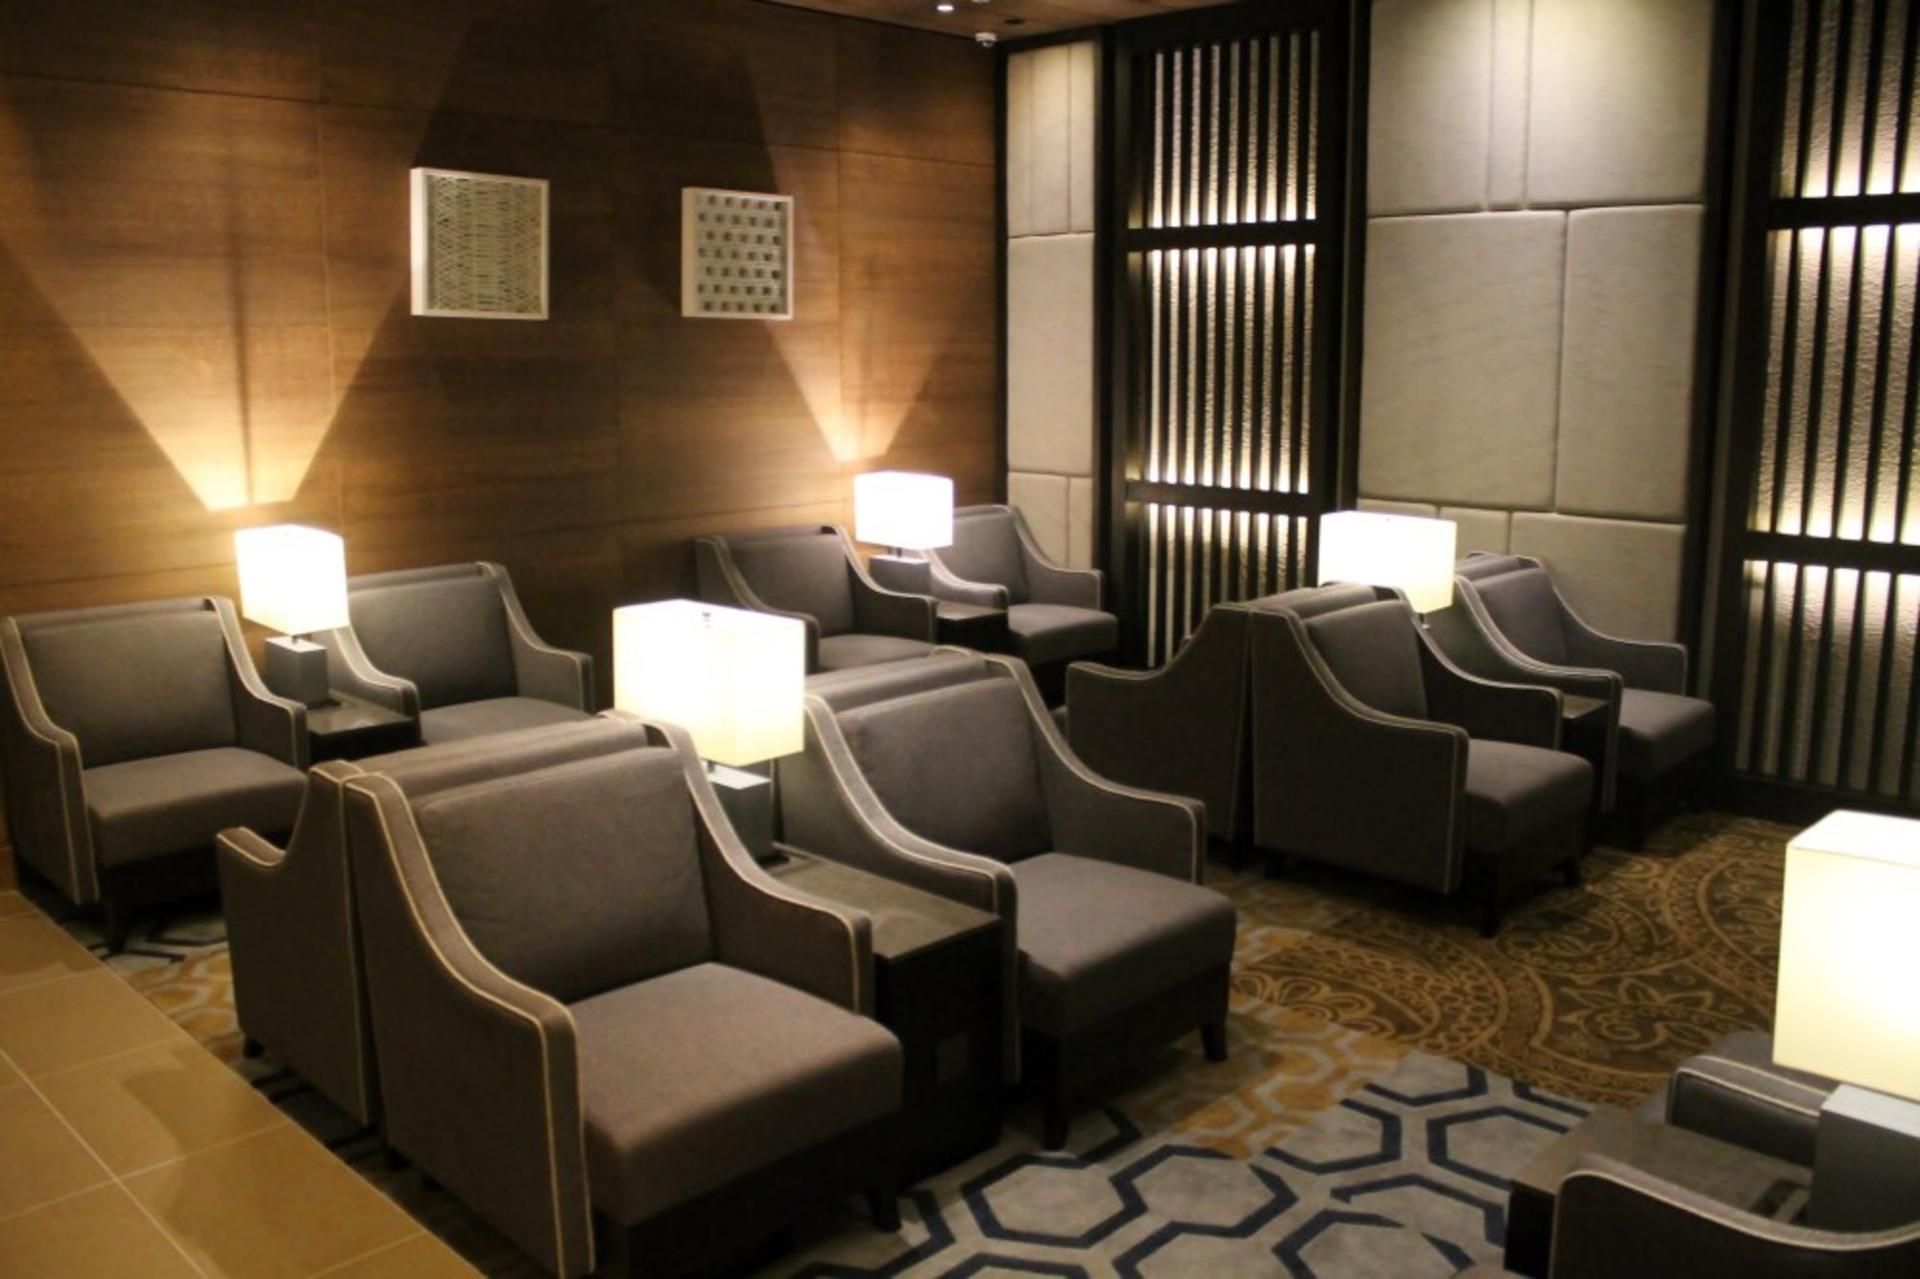 Plaza Premium Lounge image 3 of 68